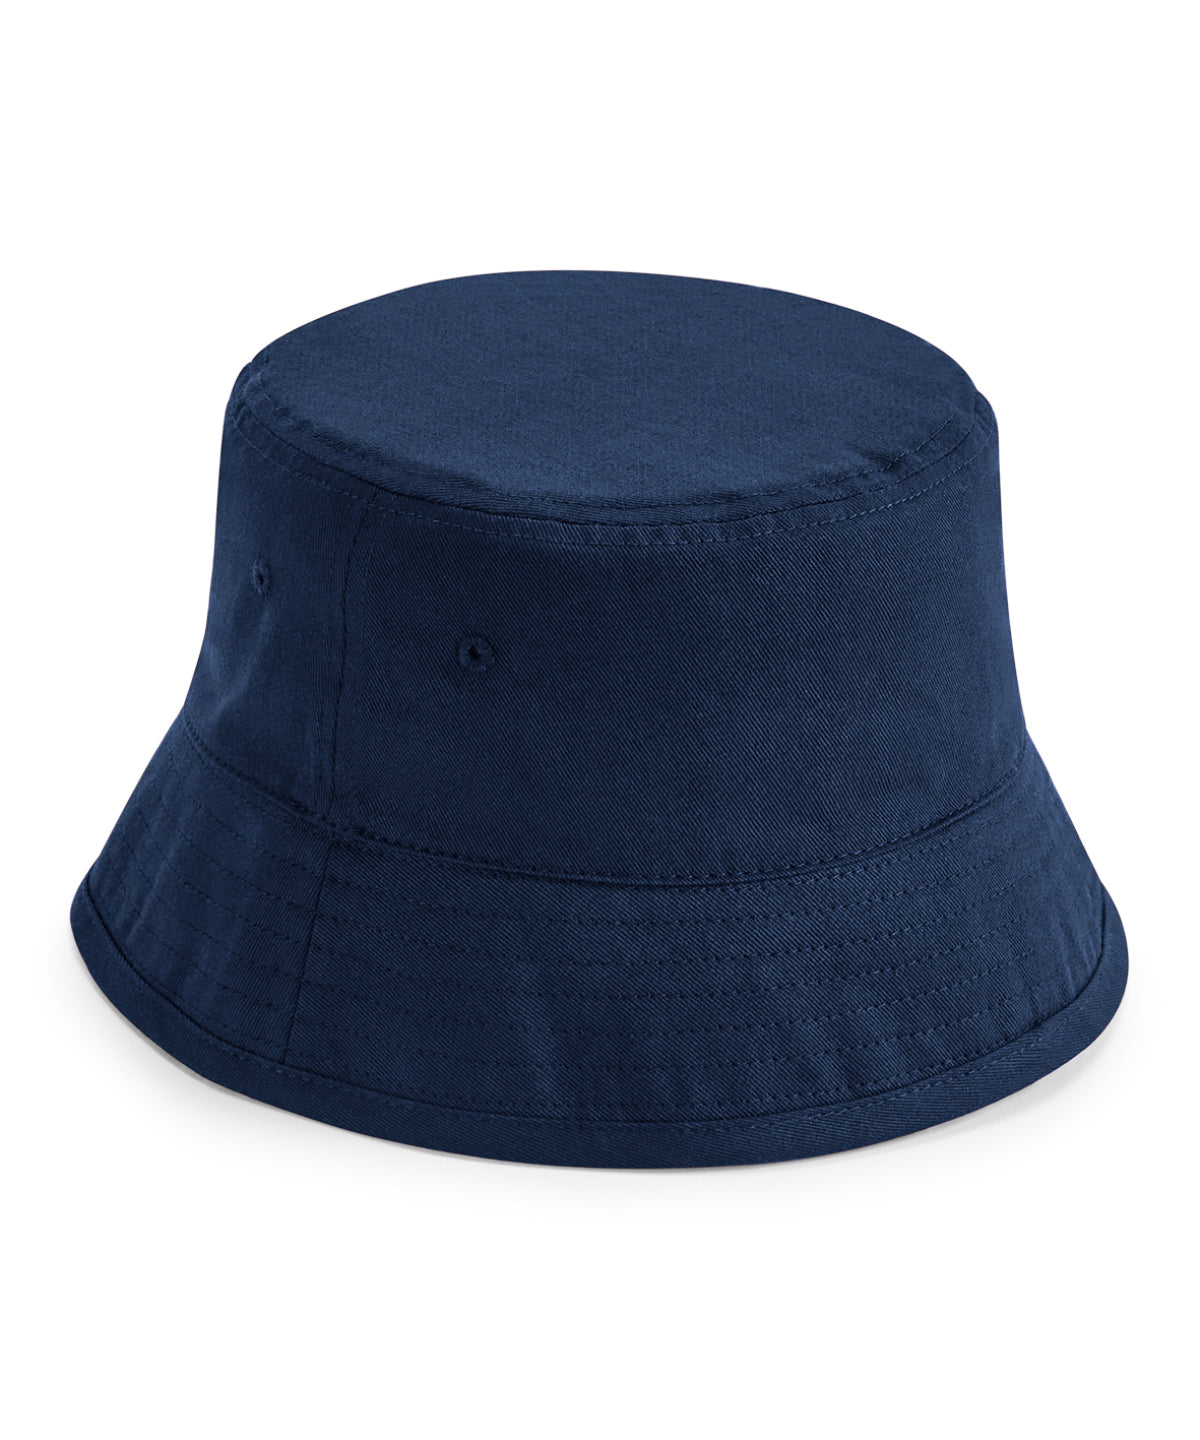 Personalised Hats - Dark Grey Beechfield Organic cotton bucket hat